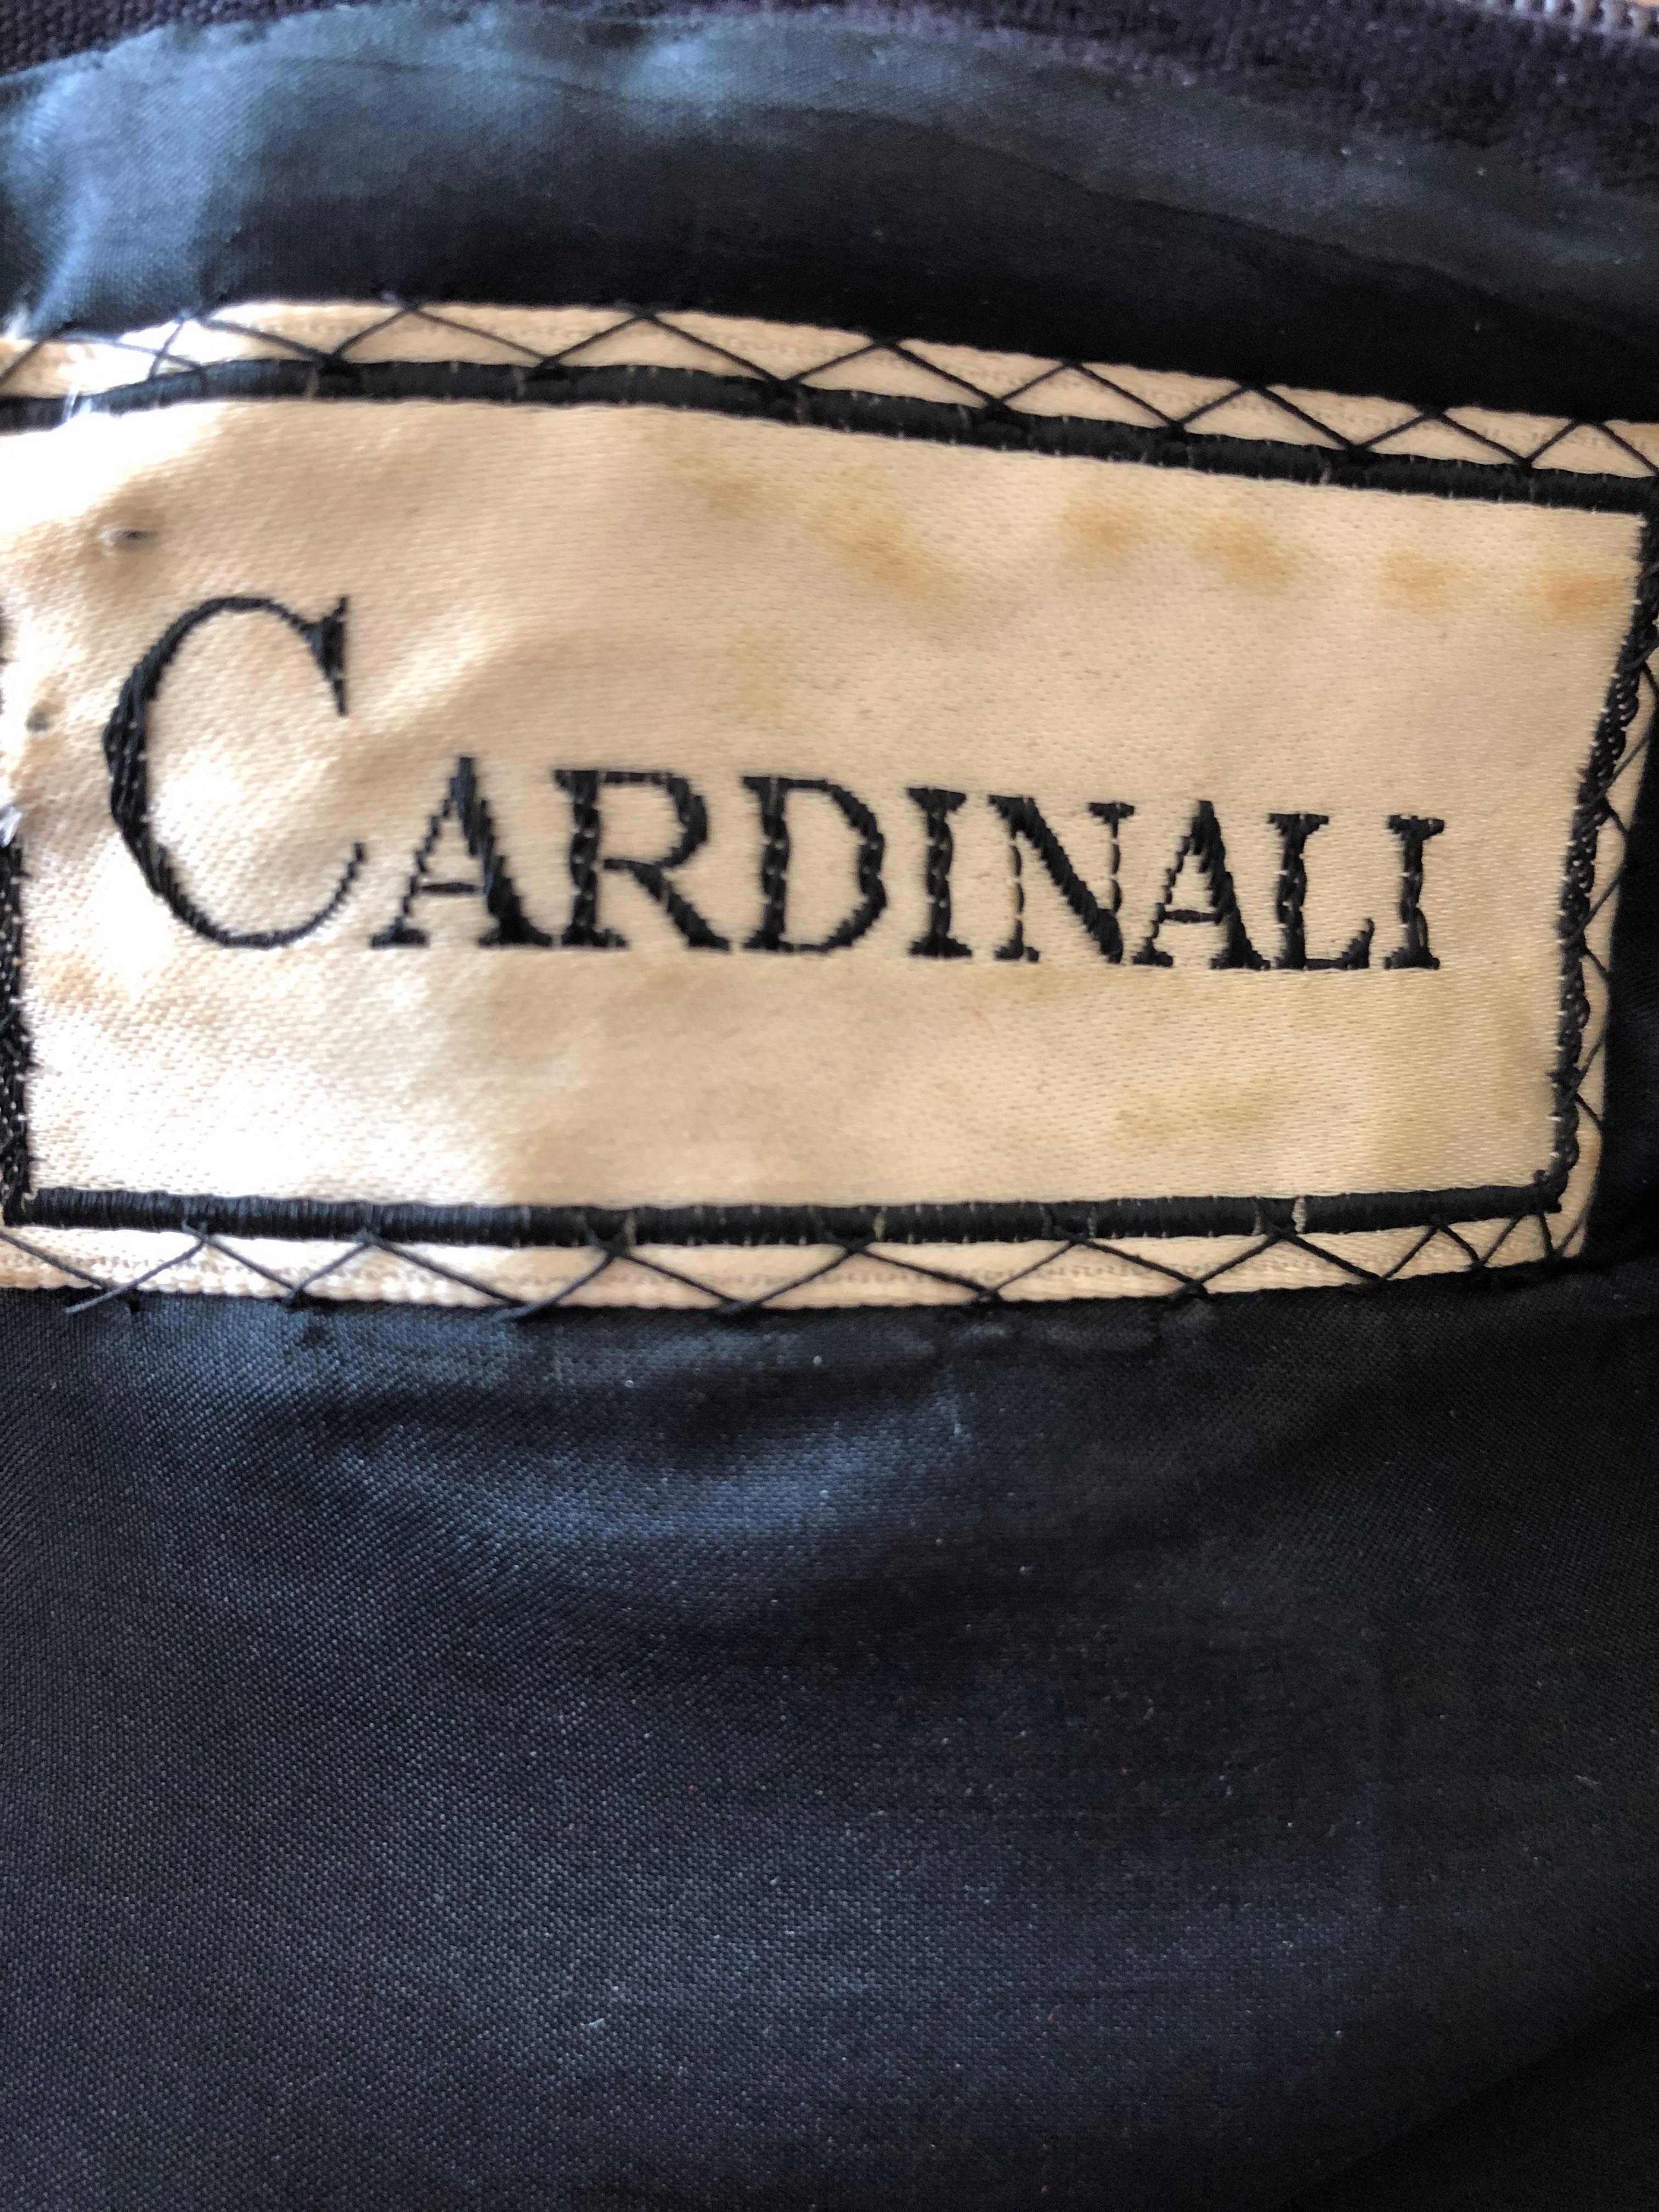 Cardinali 1975 Silk One Shoulder Evening Dress w High Slit and Matching Jacket For Sale 8